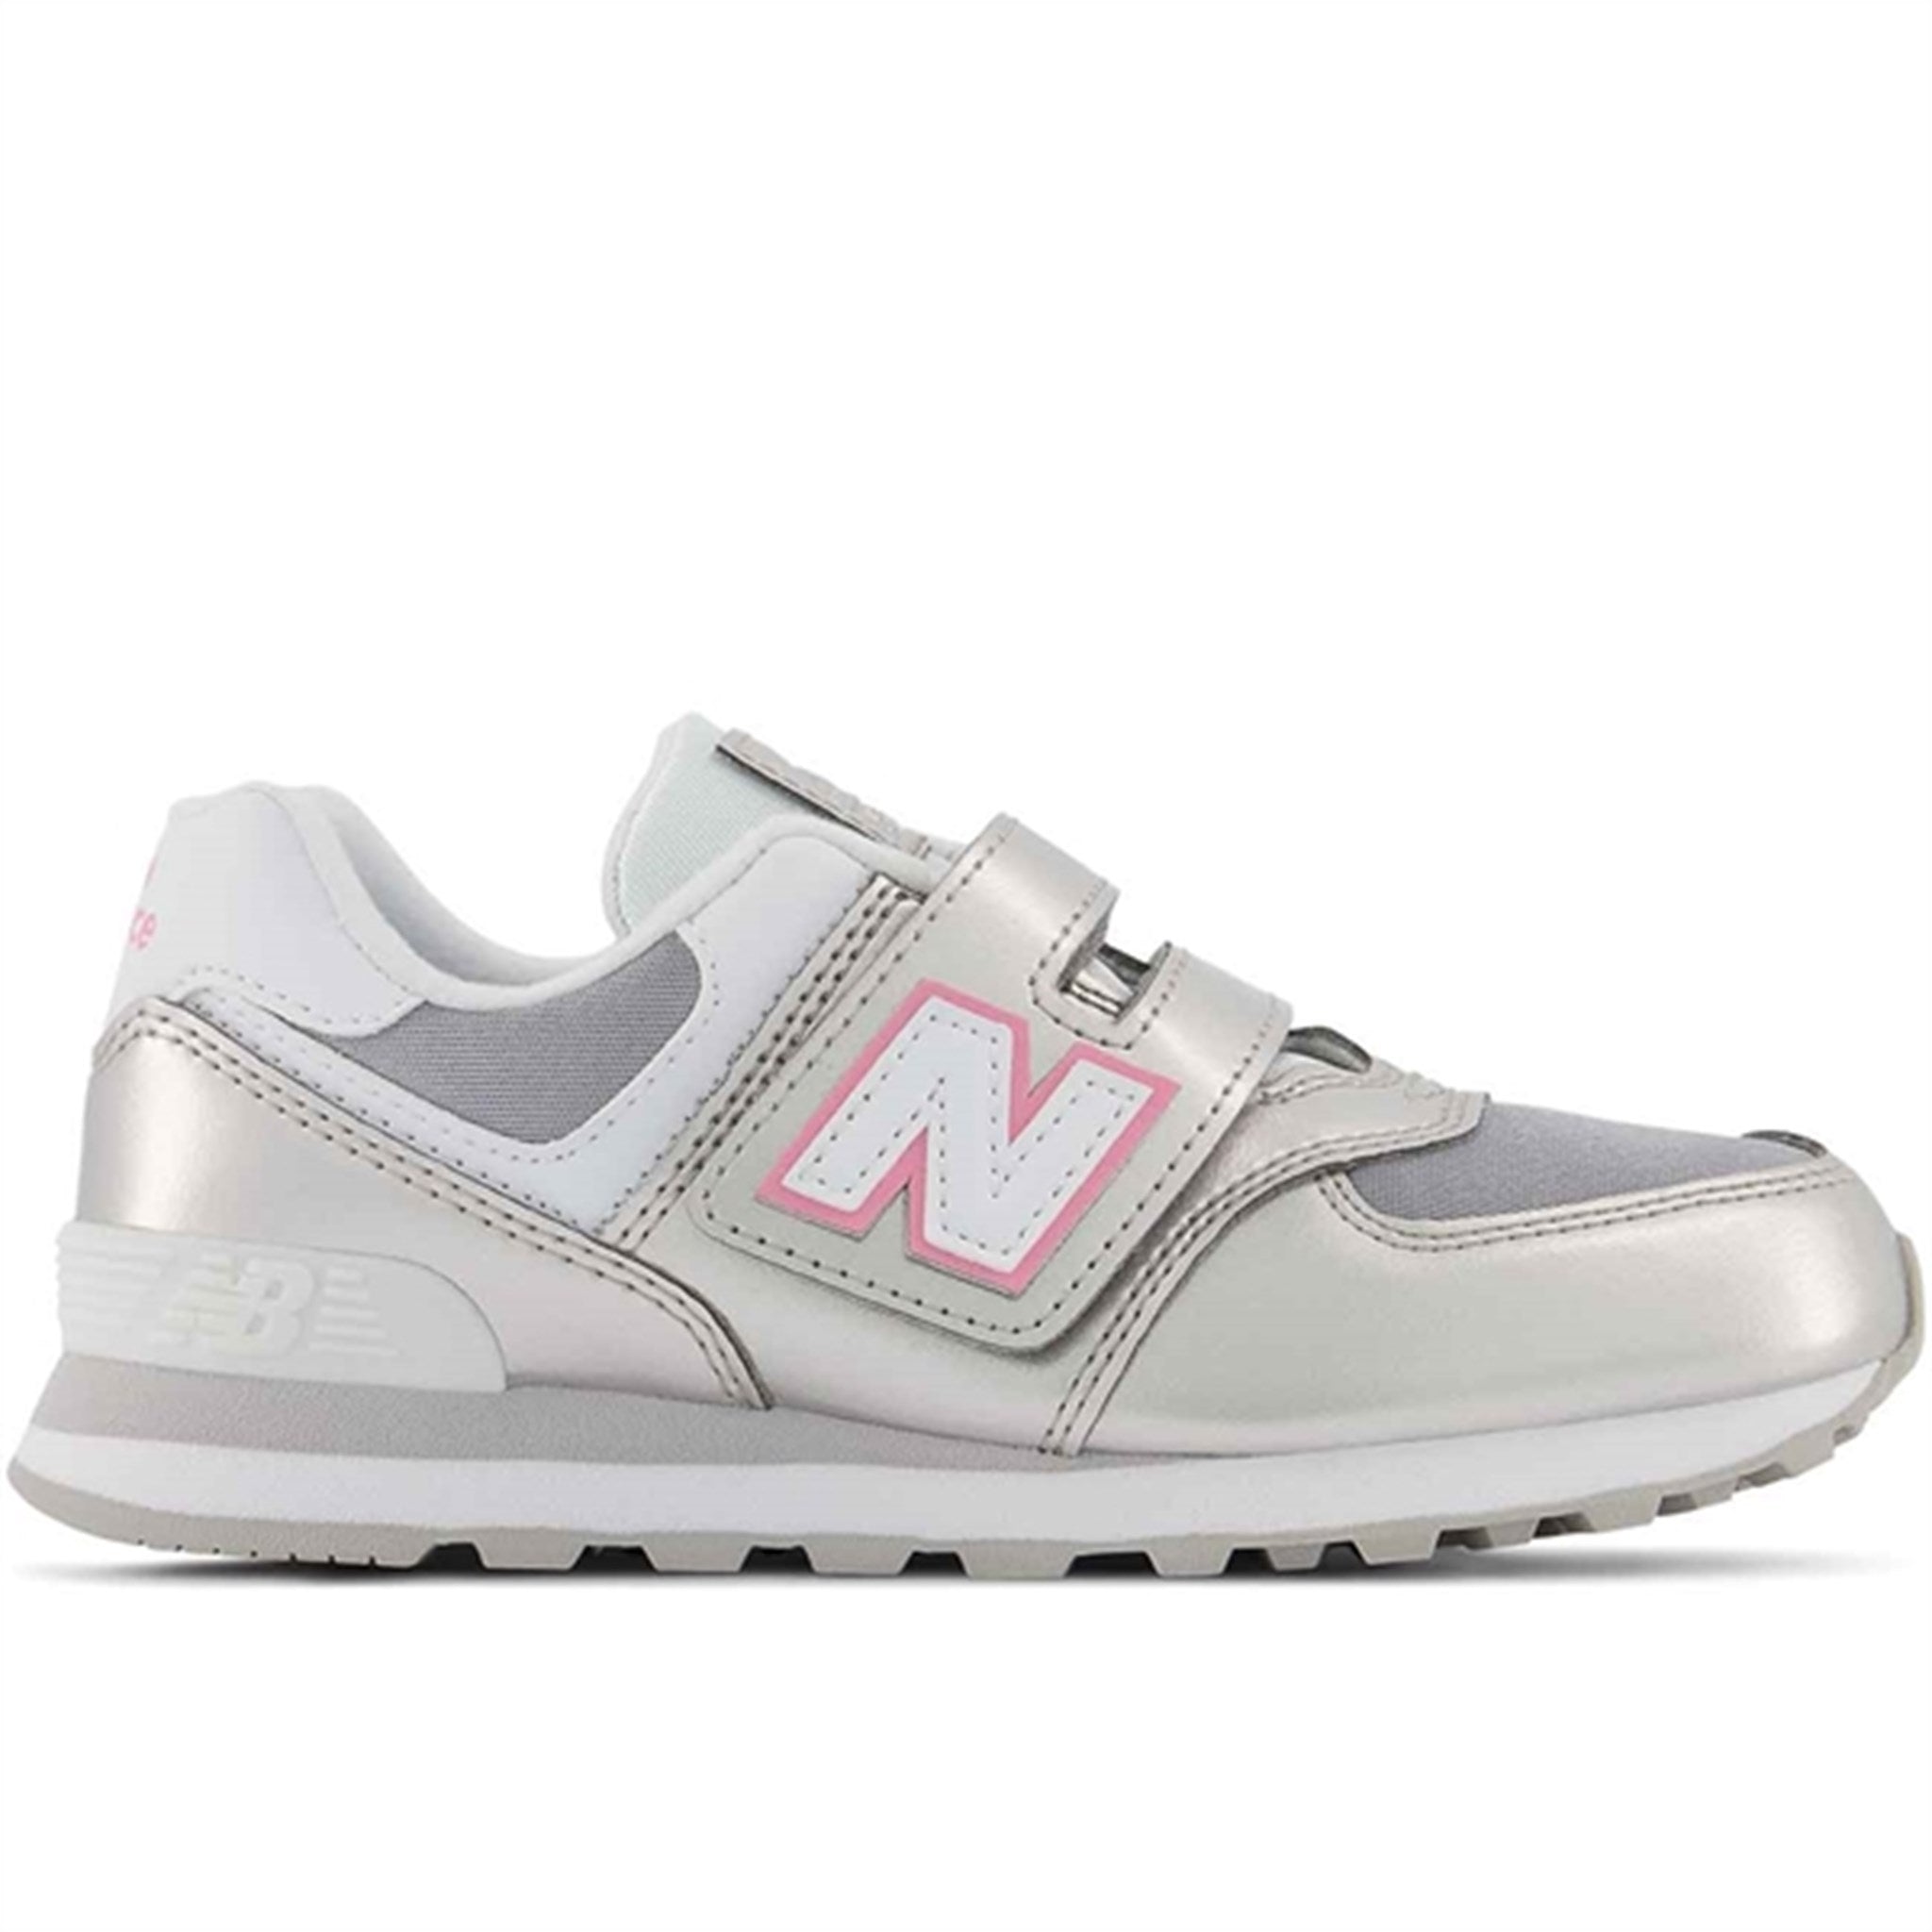 New Balance 574 Silver Metallic/Bubblegum Sneakers